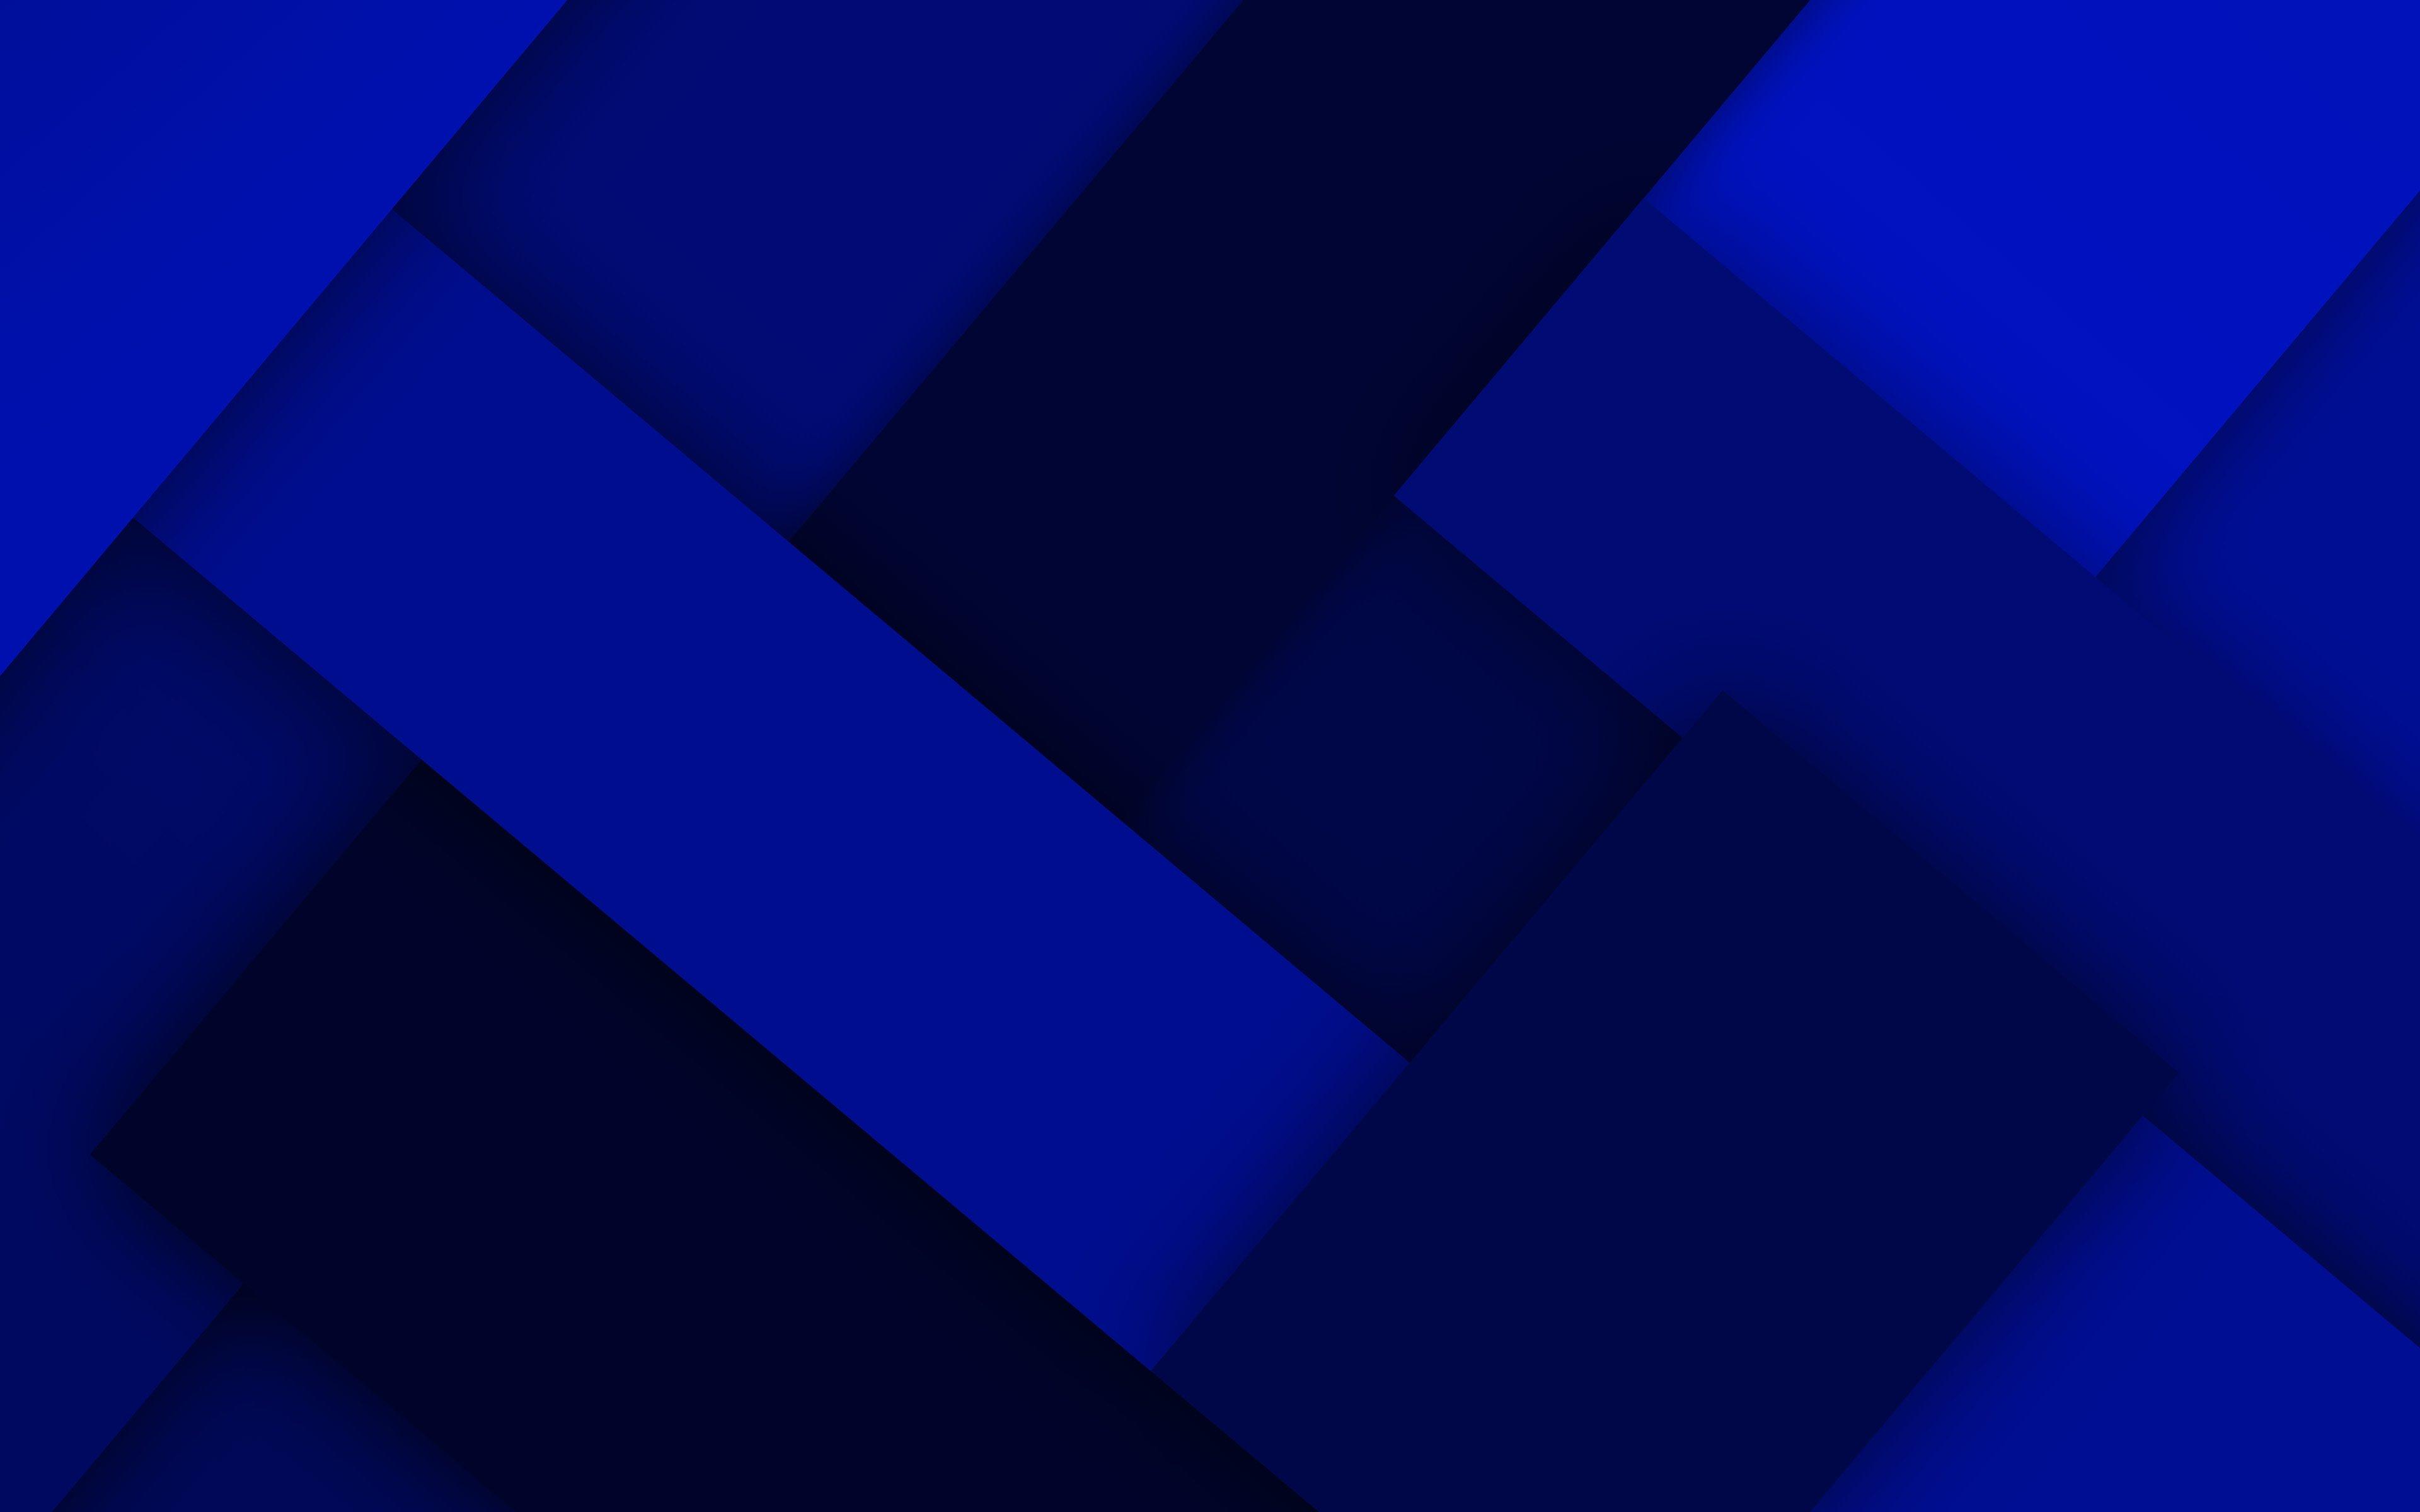 Dark Blue Geometric Wallpapers Top Free Dark Blue Geometric Backgrounds Wallpaperaccess